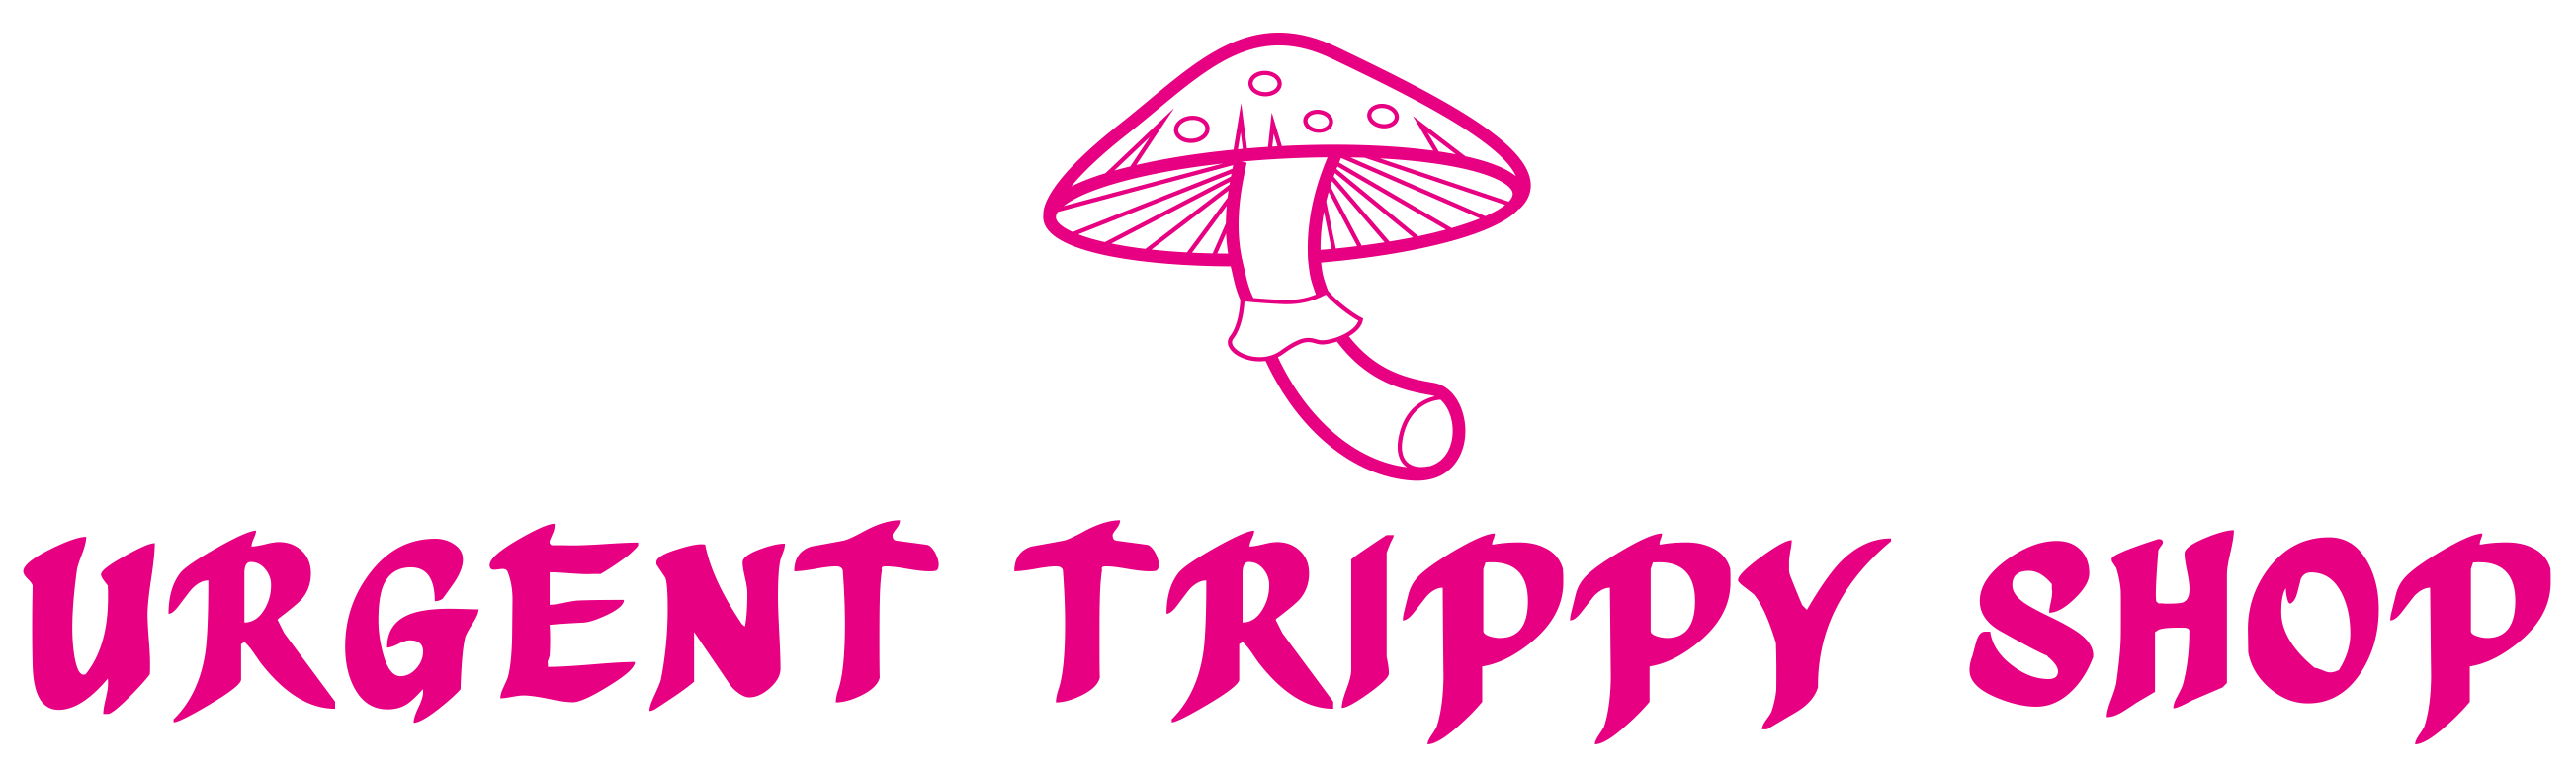 Urgent Trippy Shop